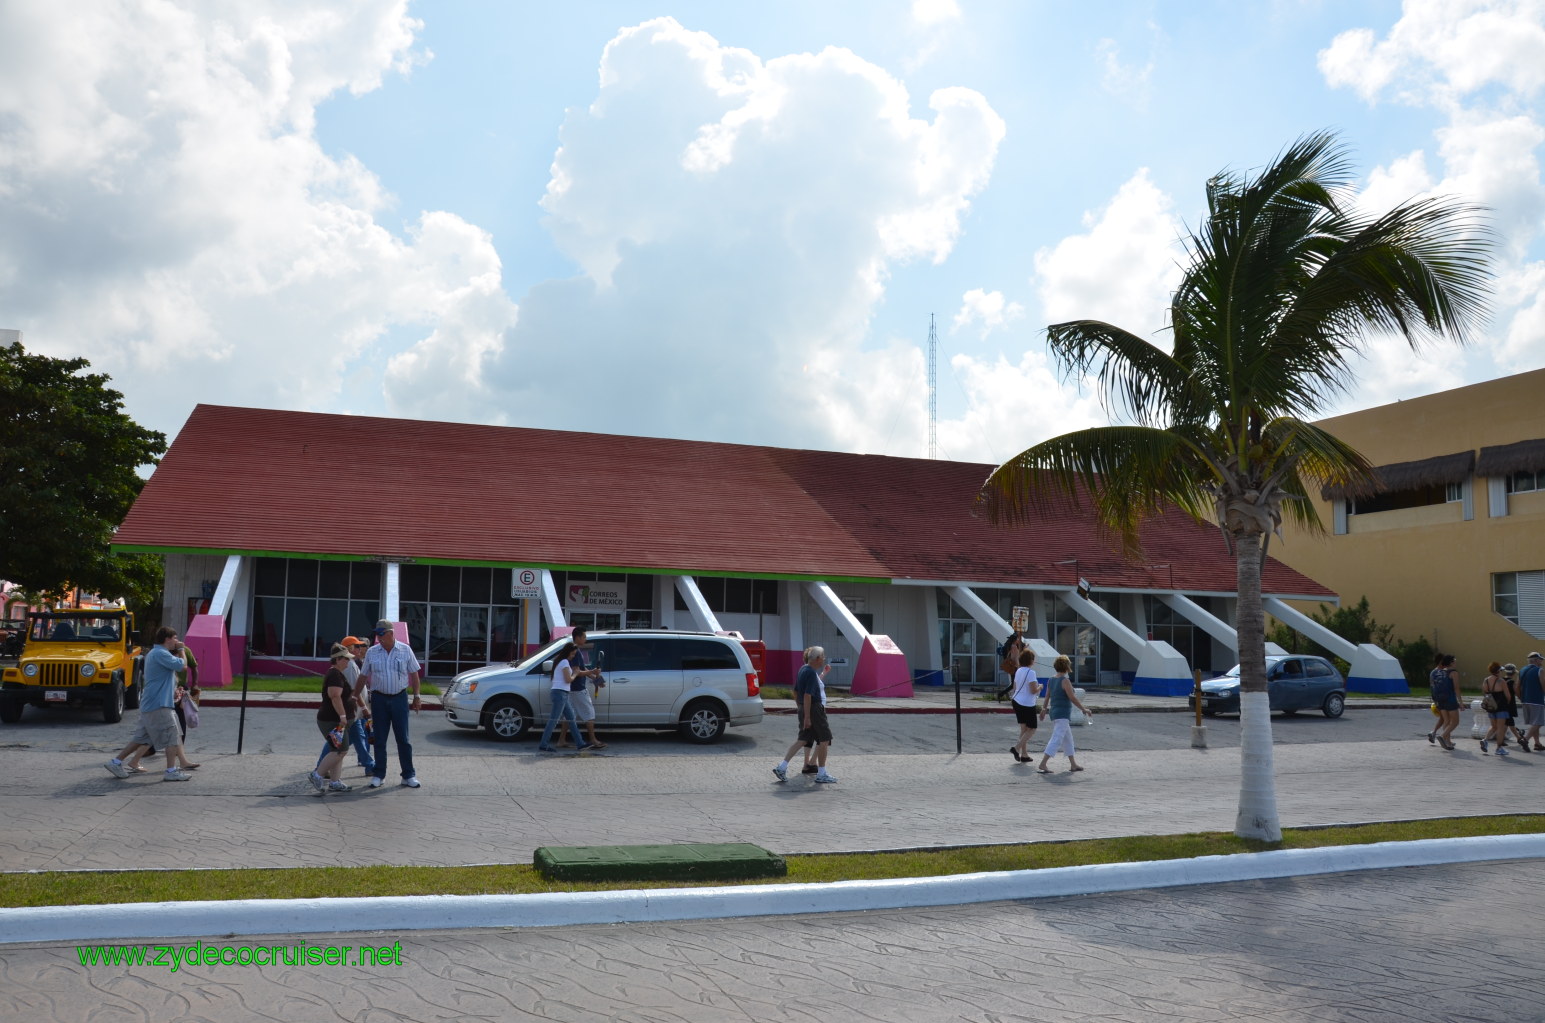 061: Carnival Conquest, Nov 18. 2011, Cozumel, Post Office